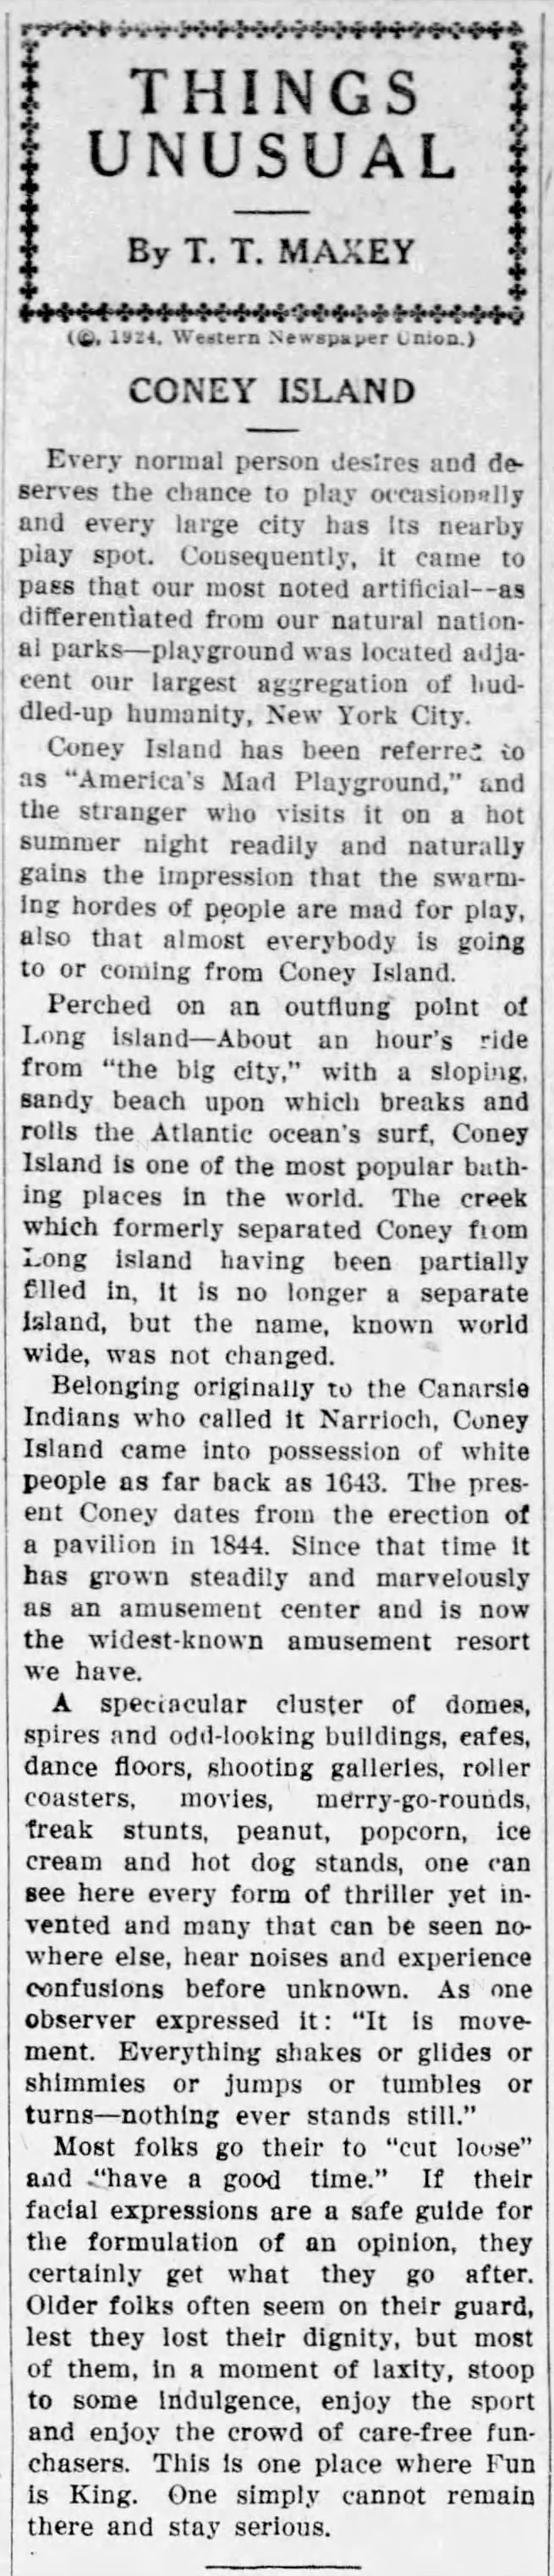 America's Mad Playground, Coney Island (1924).